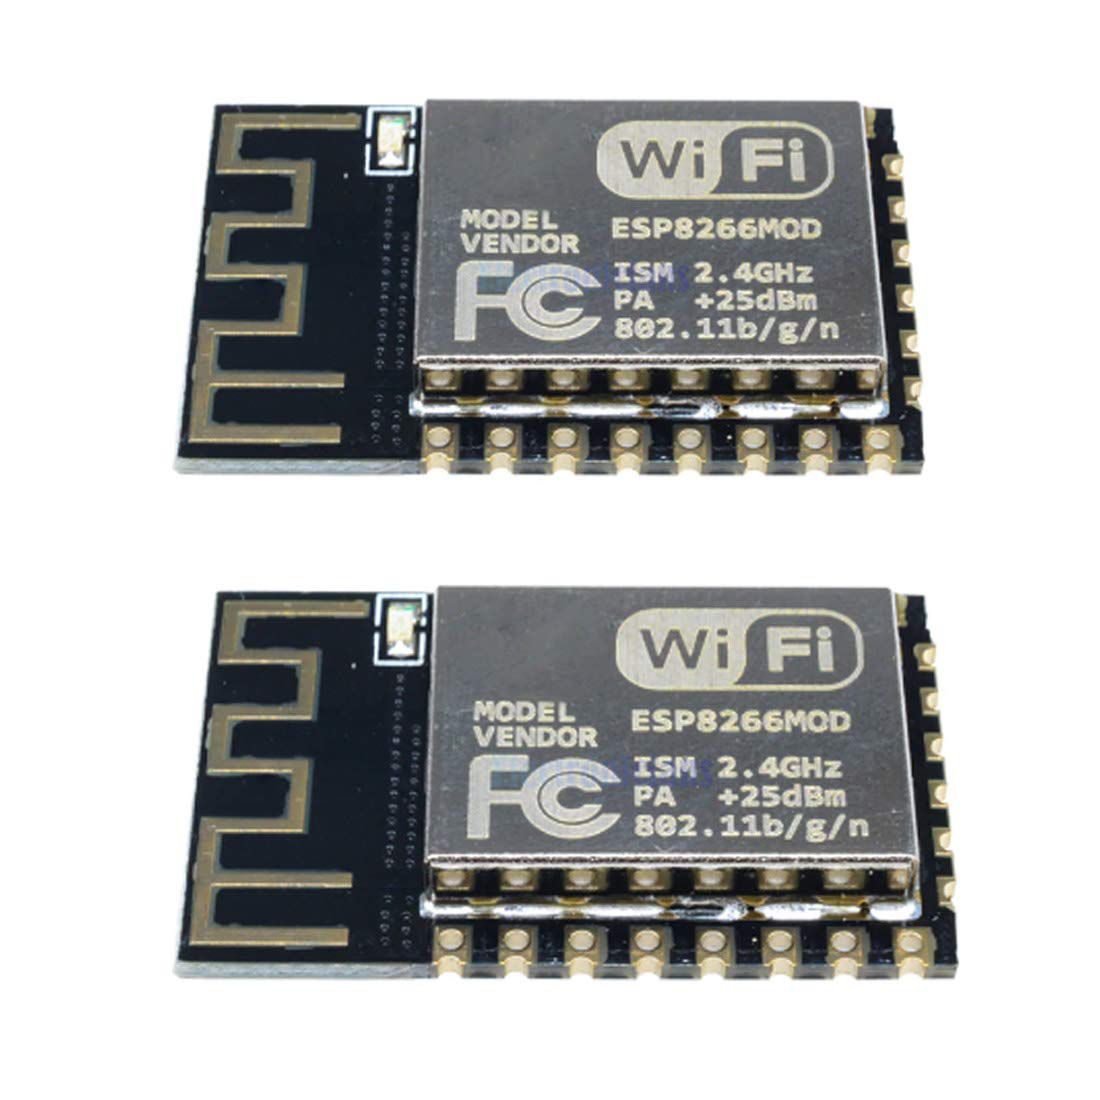 2 PCS of ESP8266 ESP-12F WiFi Serial Module Board for Arduino Wireless Transceiver Remote Port Network Development Board 